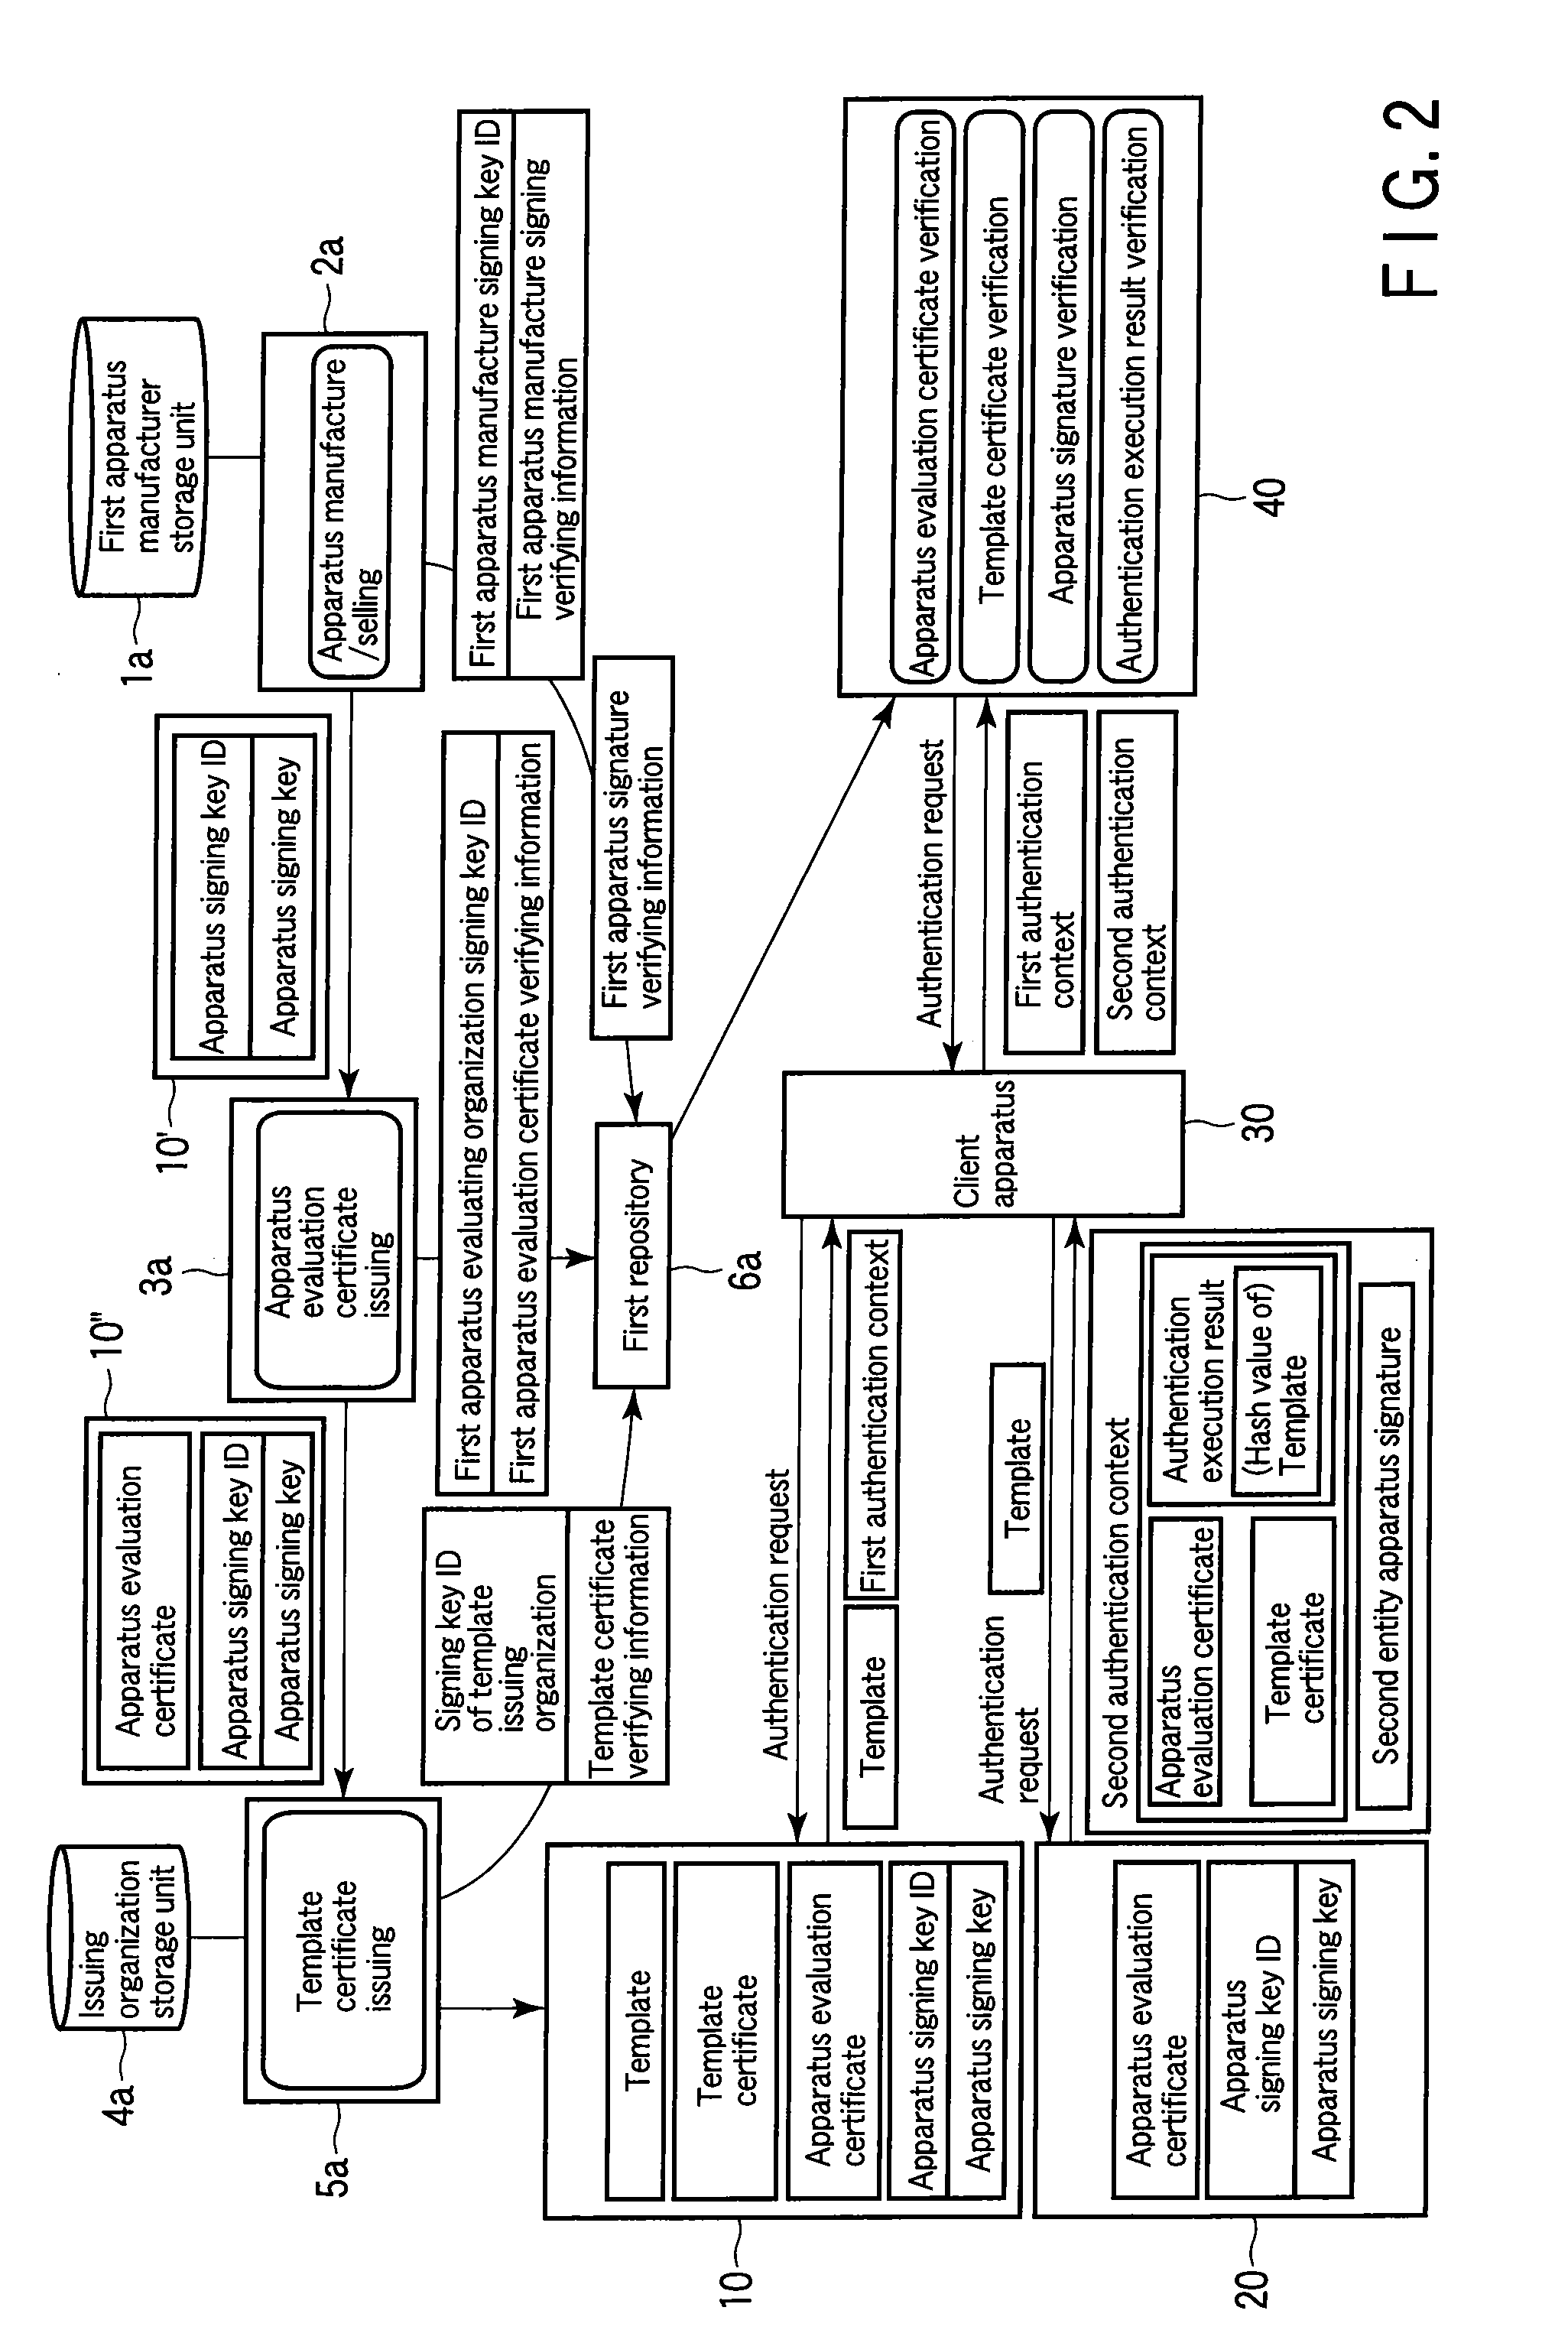 Verification apparatus and program